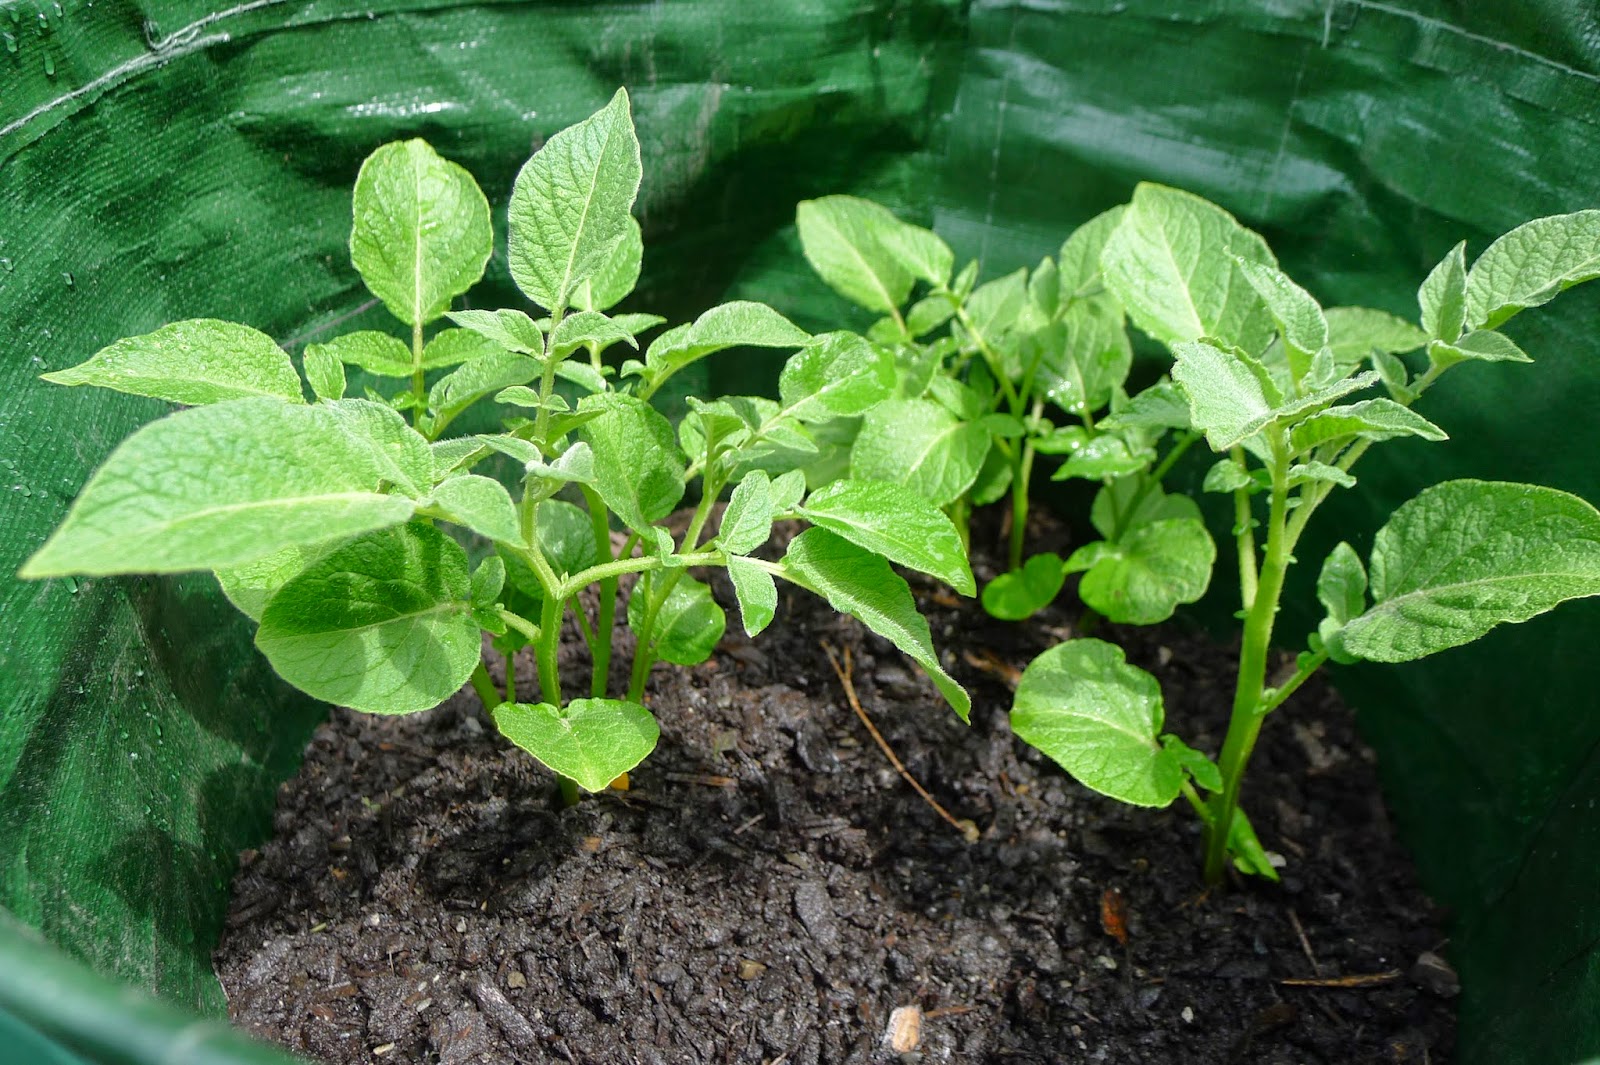 Grow bag potatoes, hilling and fertilizing potatoes